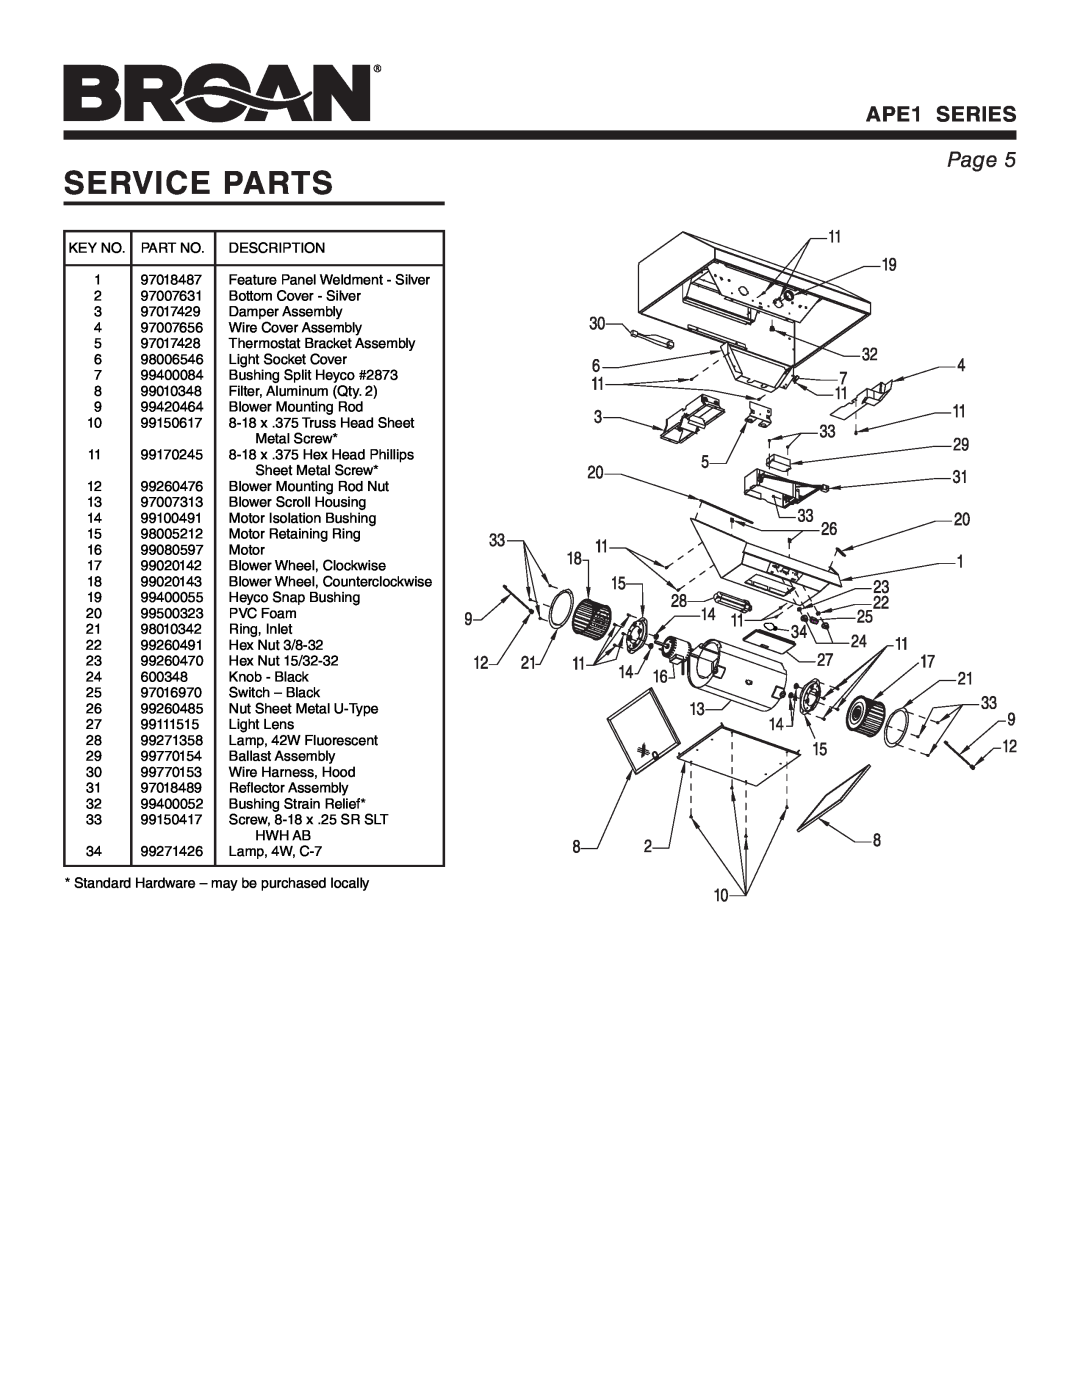 Broan warranty Service Parts, APE1 SERIES, Page 